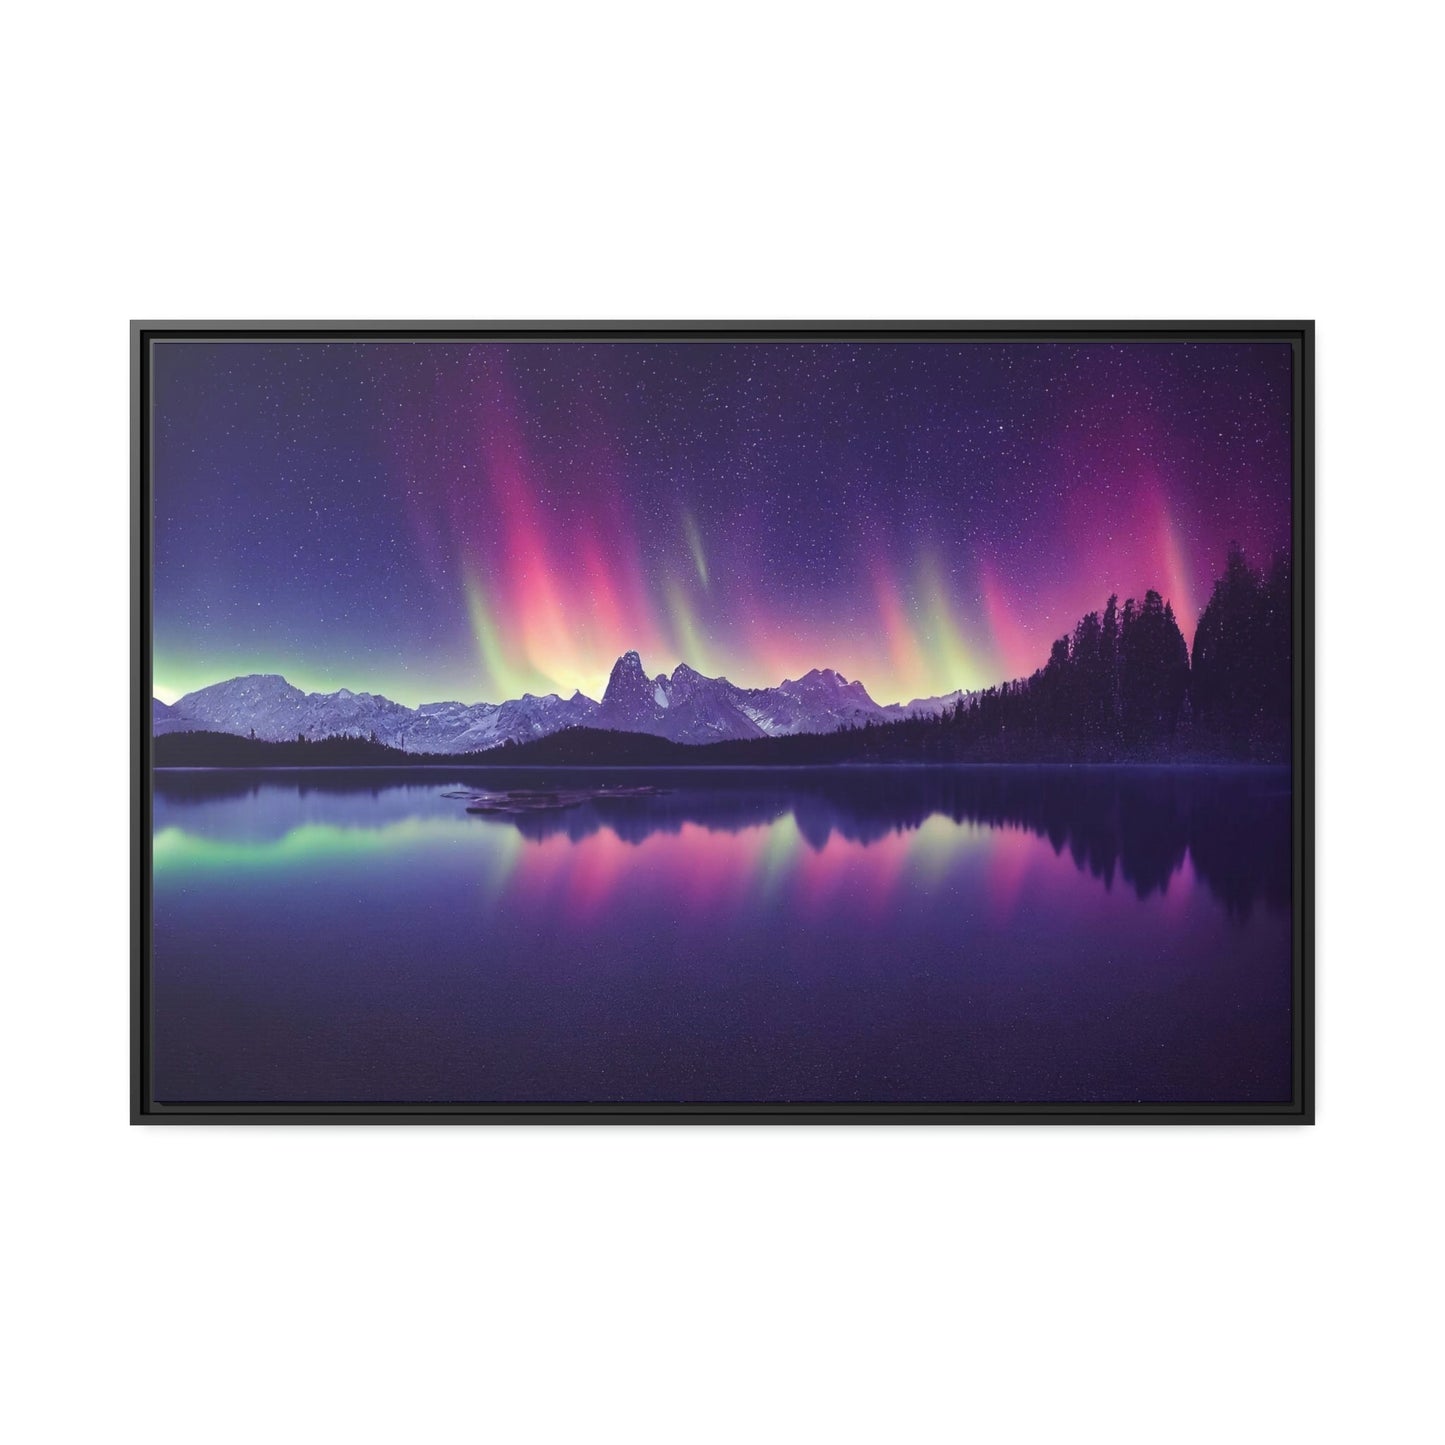 Aurora Borealis Serenade: A Harmonious Display of Light and Color